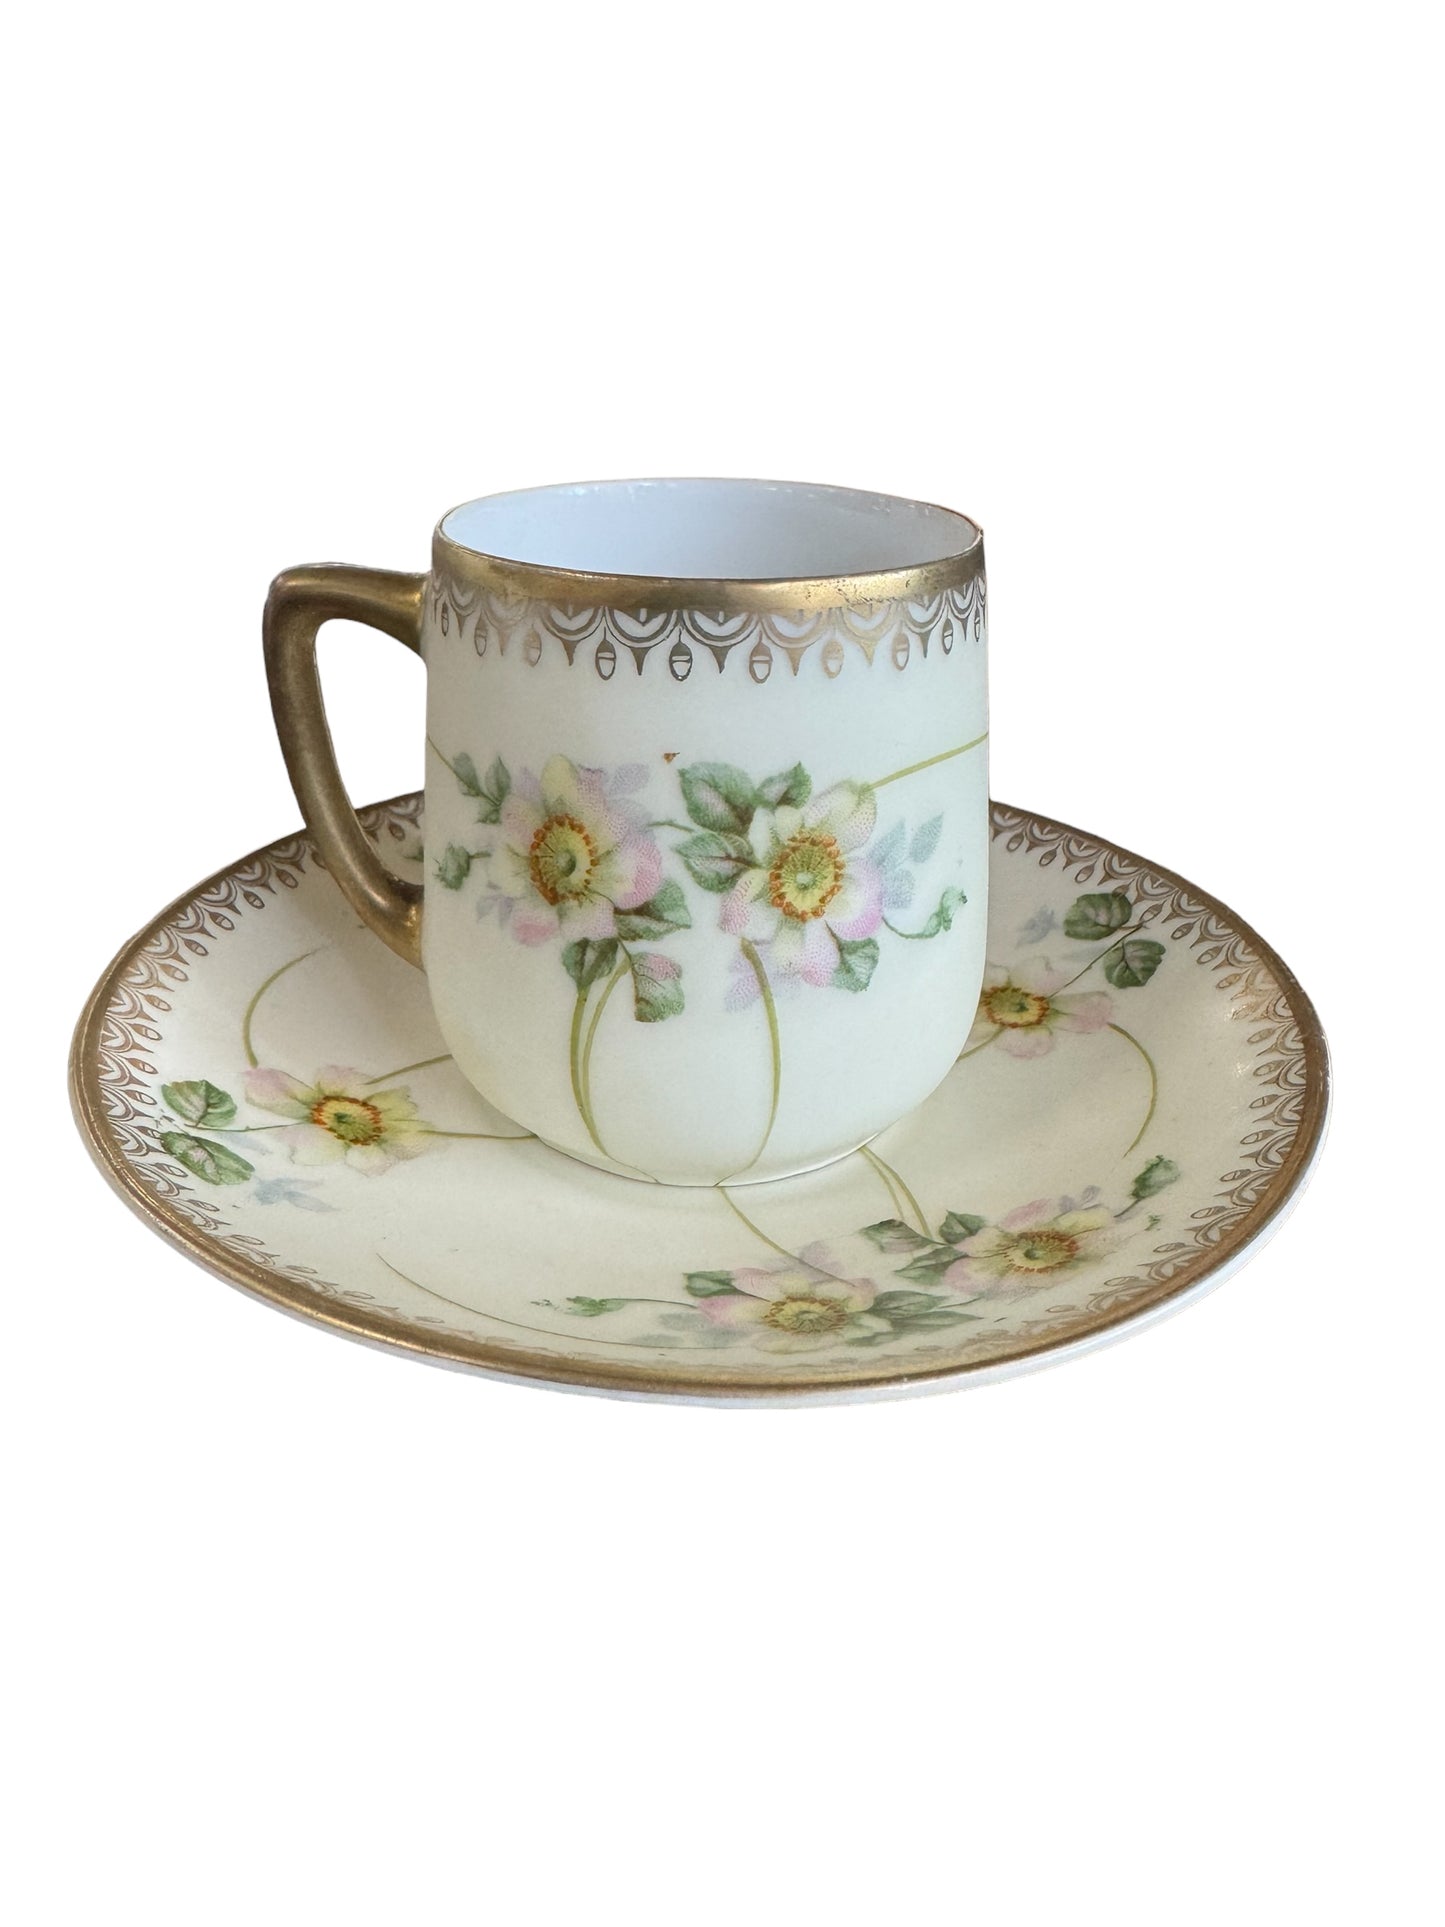 Antique Porcelain Bavaria Tea Cup and Saucer Dogwoods